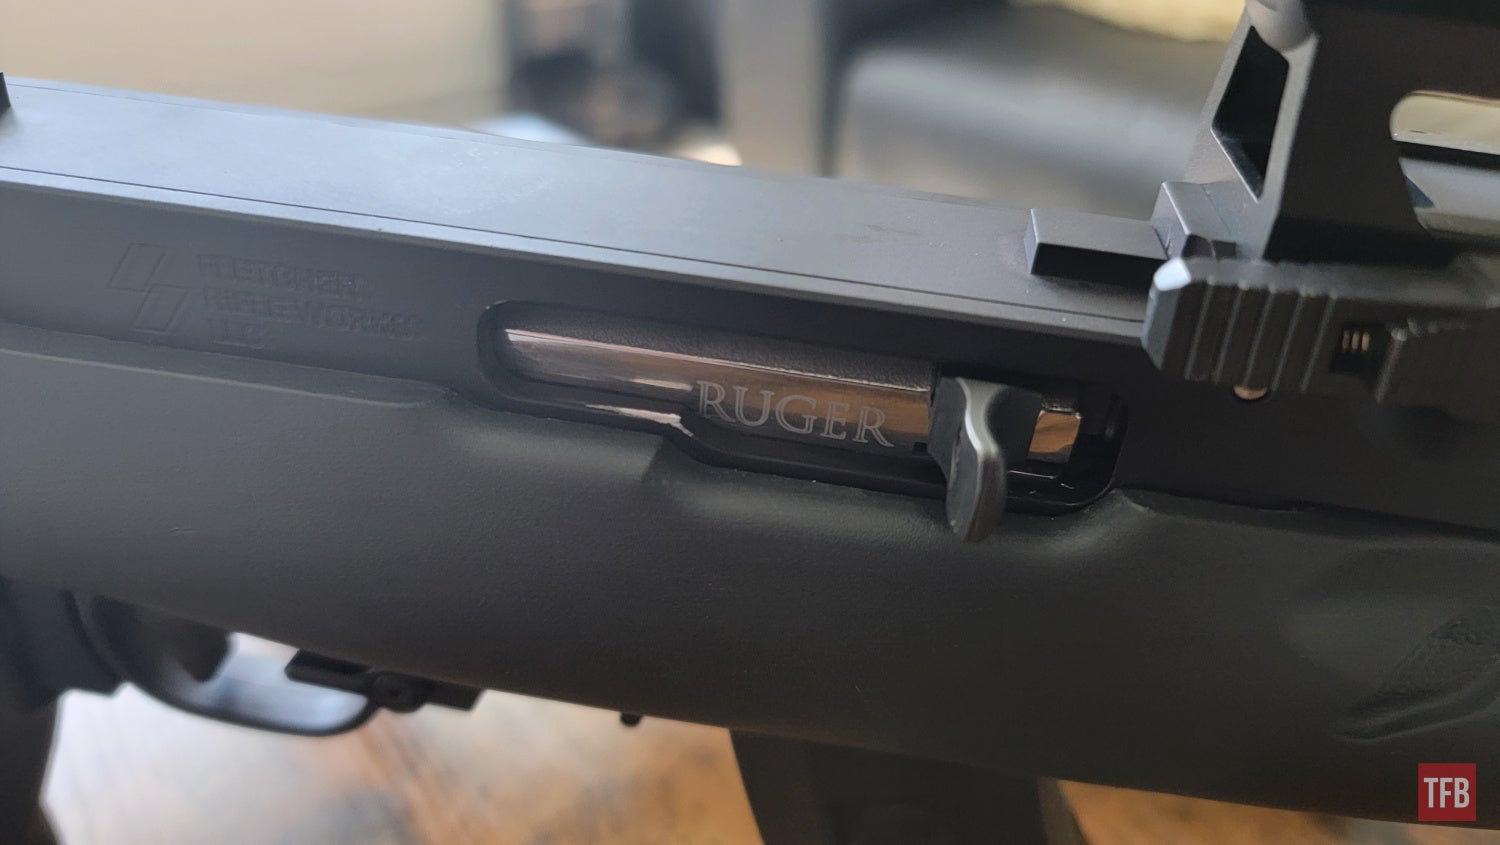 The Rimfire Report: Fletcher Rifle Works 11/22 OpenTop Reciever Review